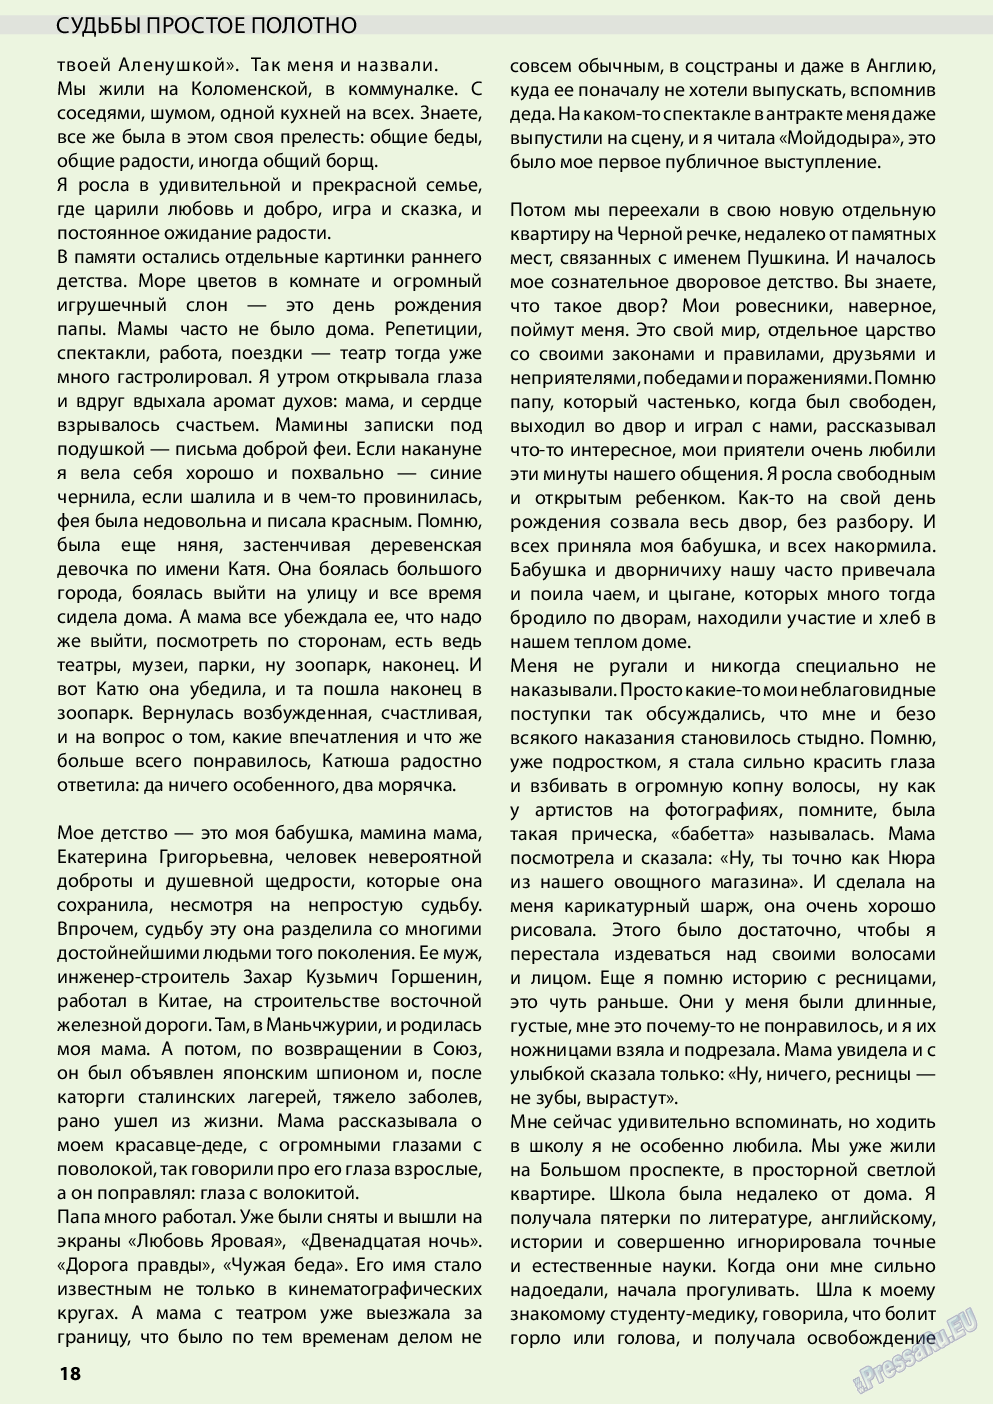 Wadim, журнал. 2014 №6 стр.18